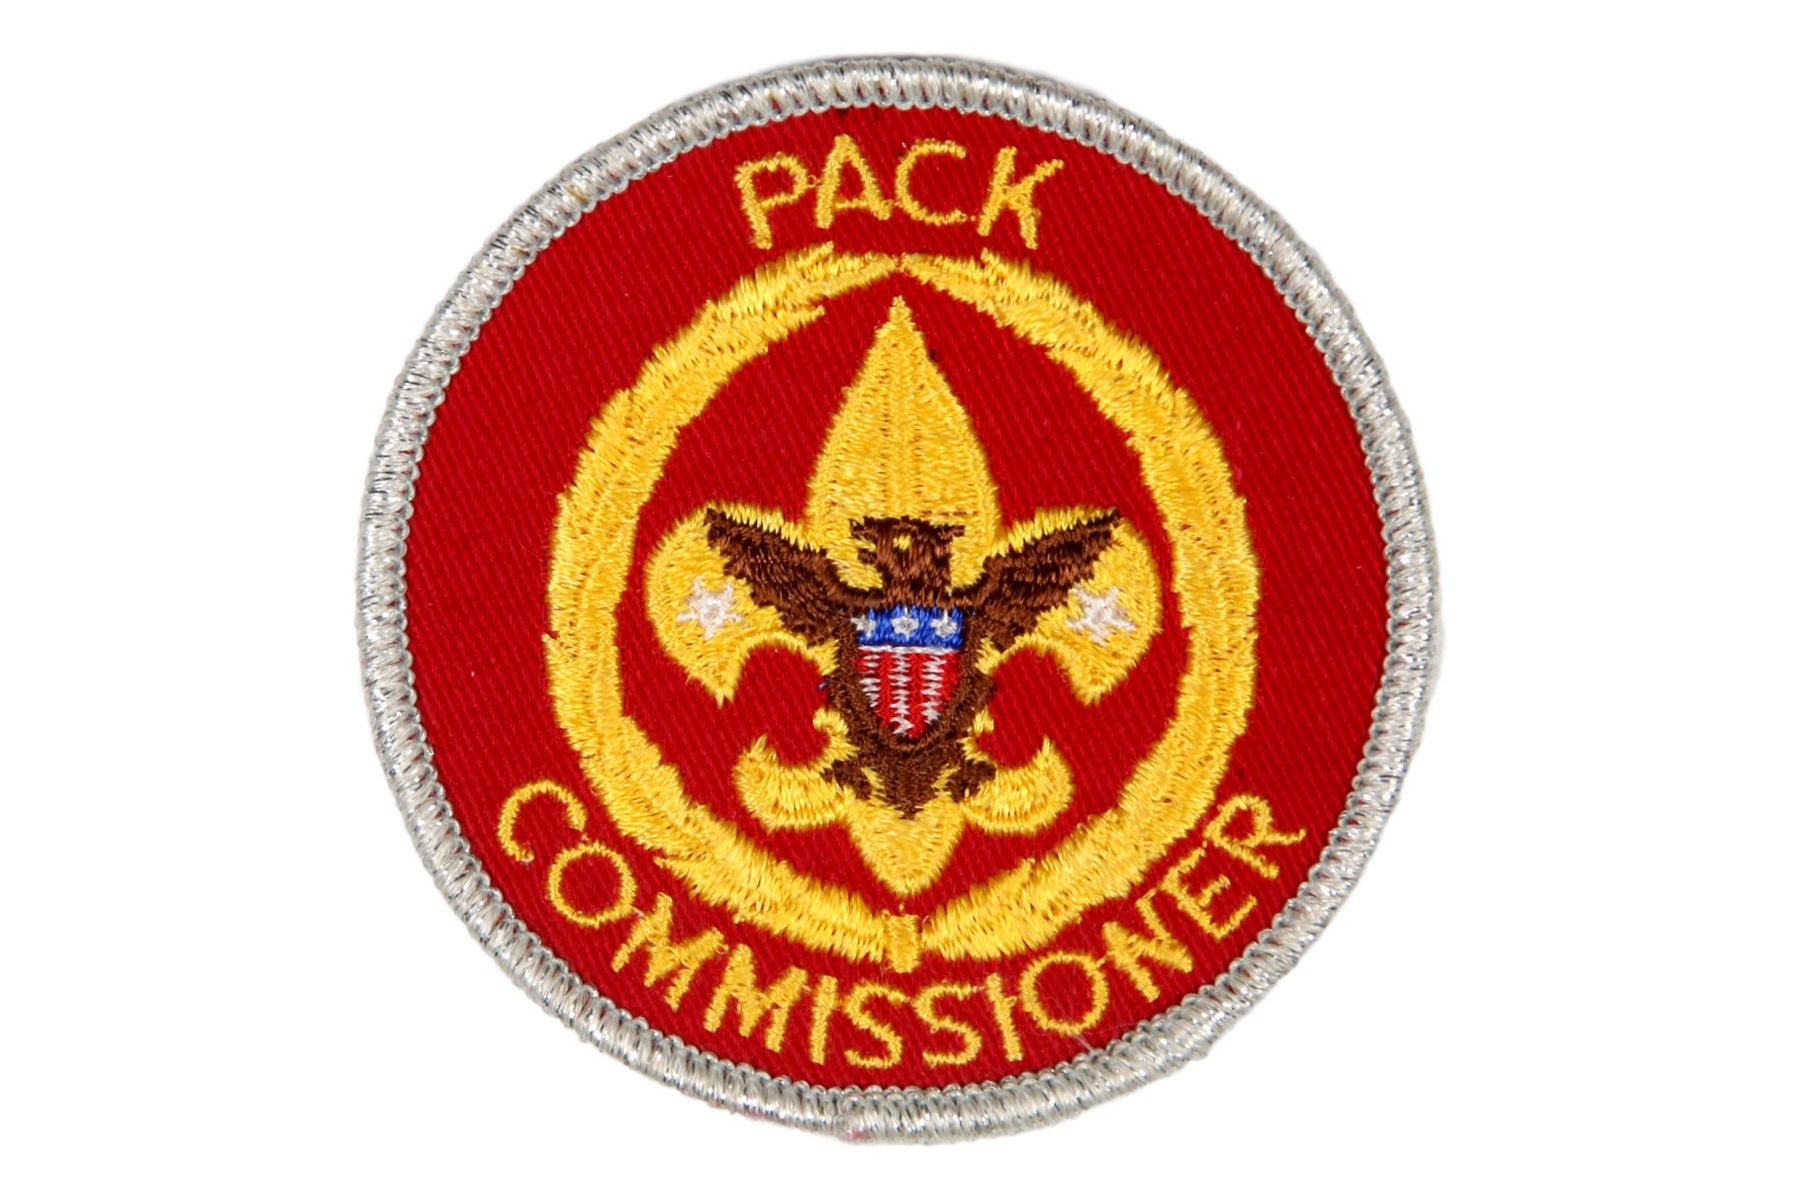 Pack Commissioner Patch Silver Mylar Border Palstic Back